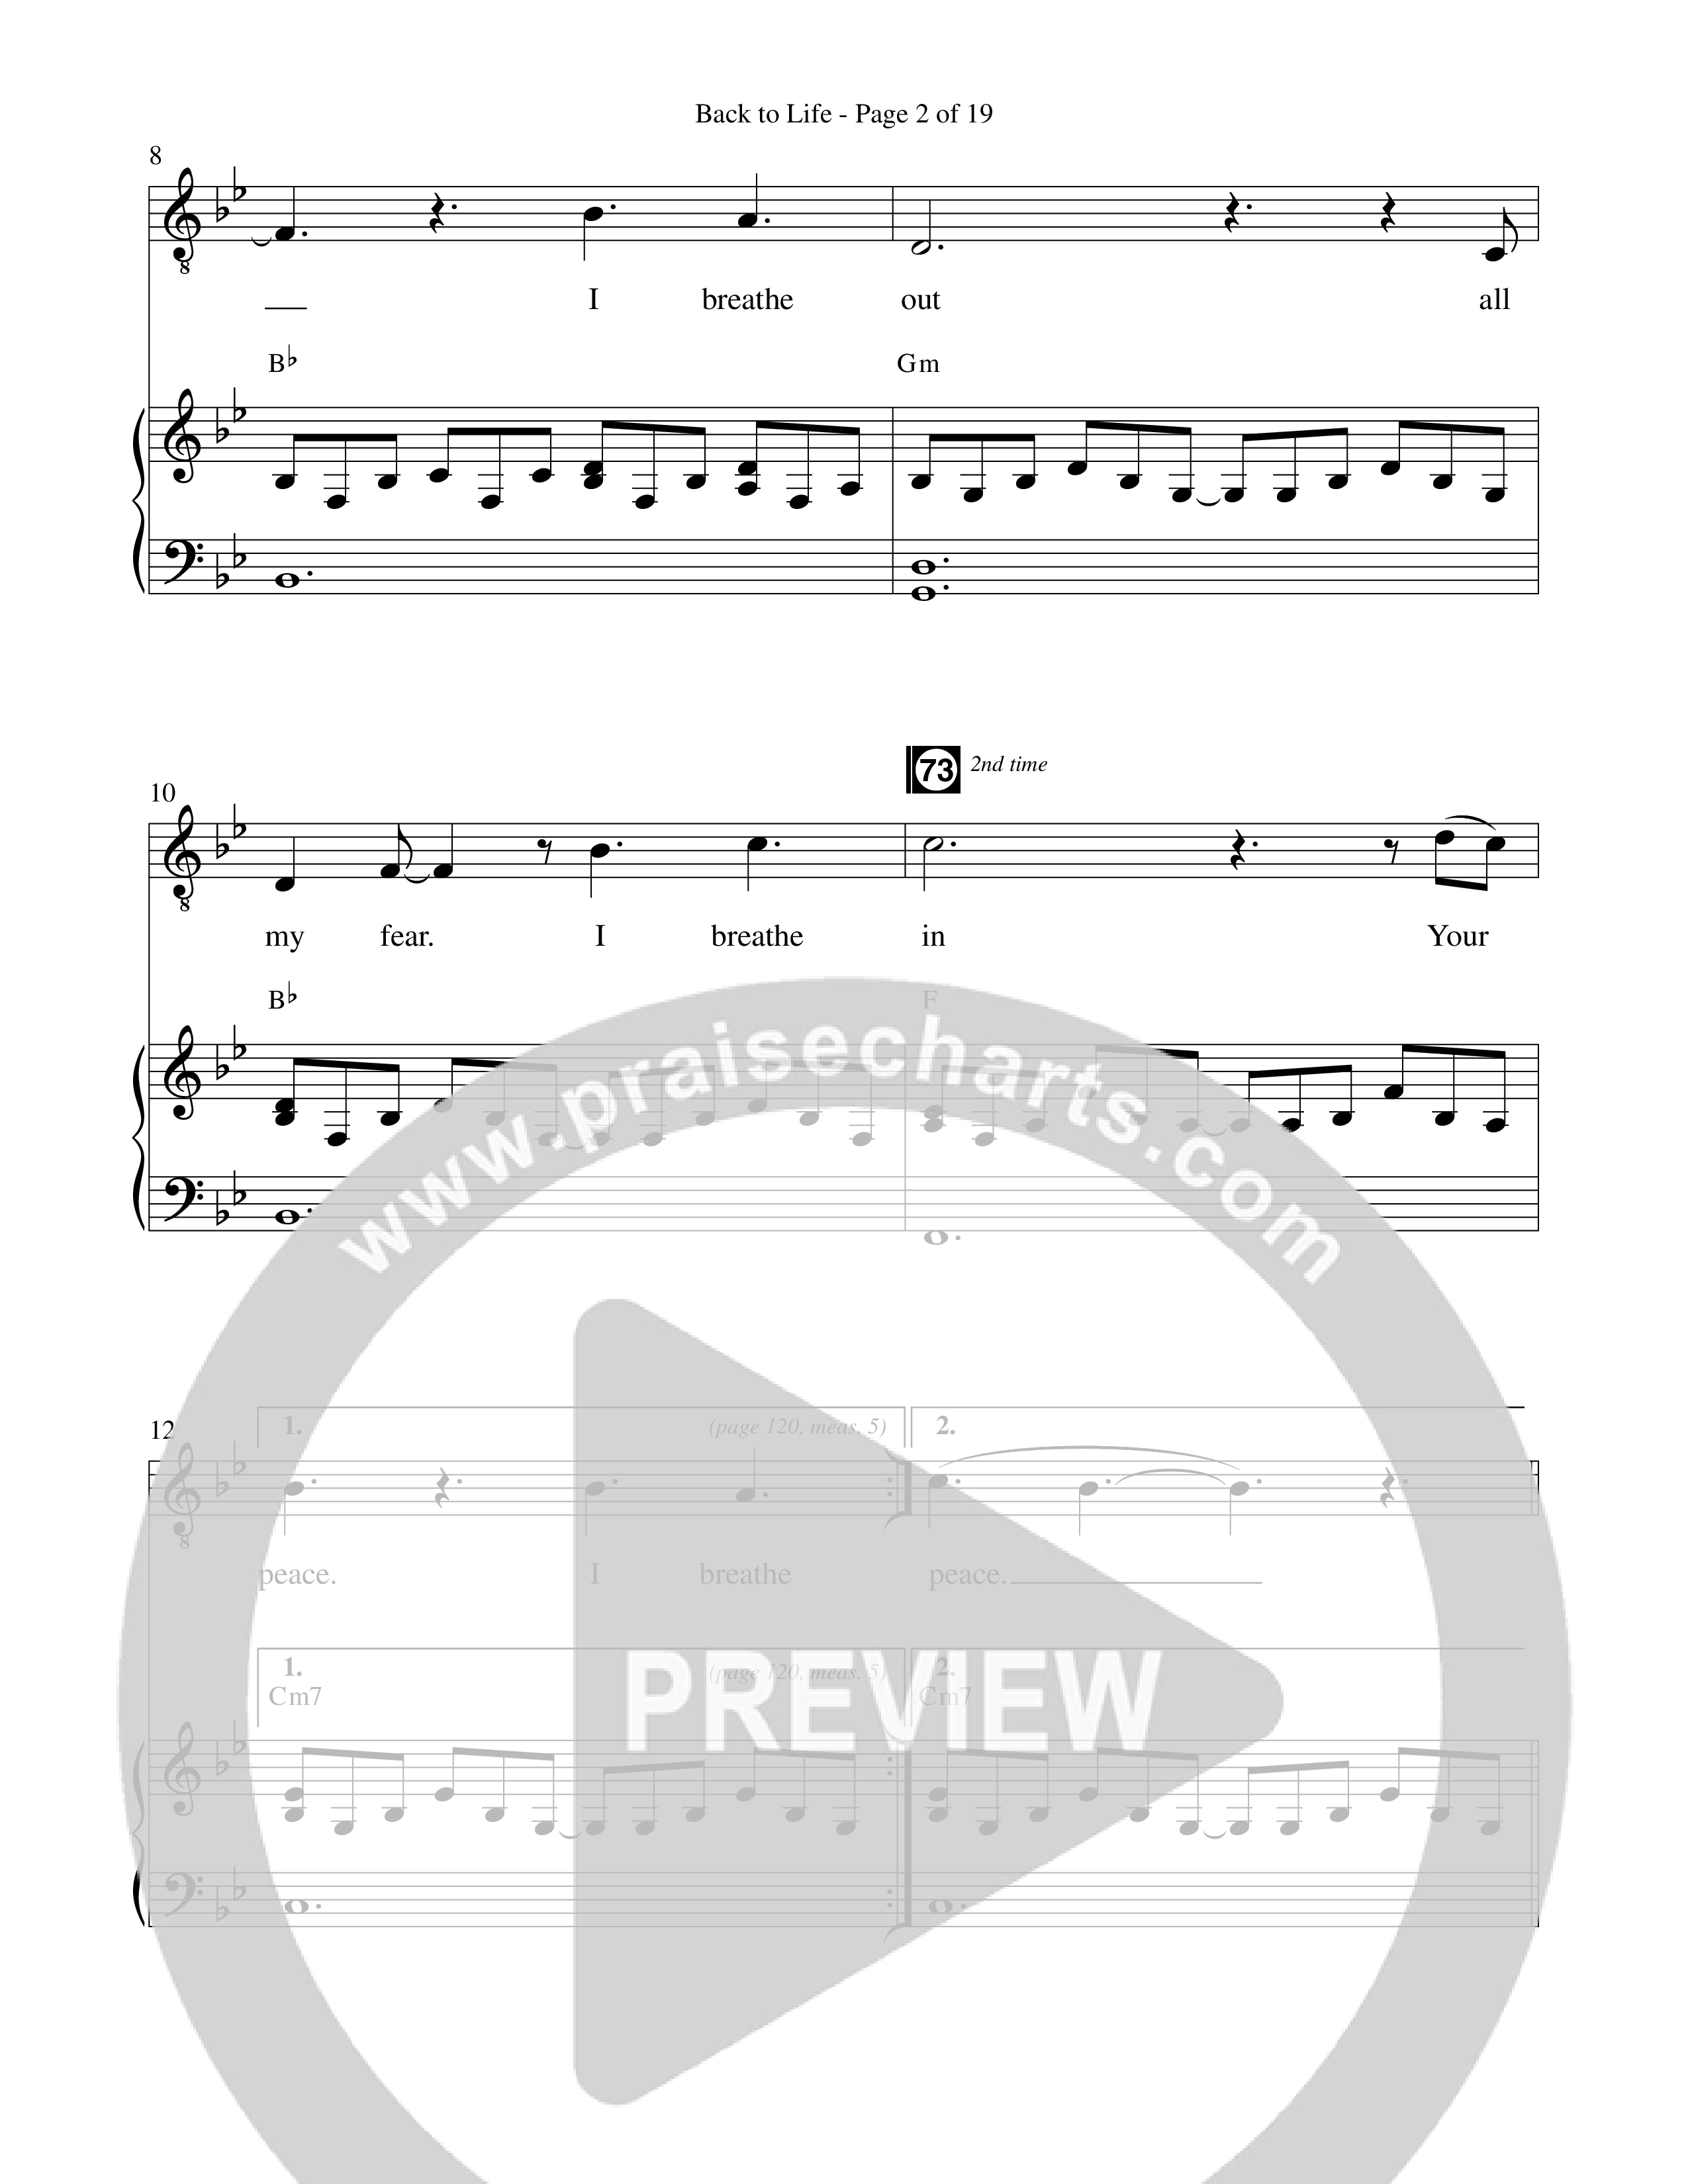 Back To Life (Choral Anthem SATB) Octavo (Vocals & Piano) (Prestonwood Worship / Prestonwood Choir / Arr. Carson Wagner)